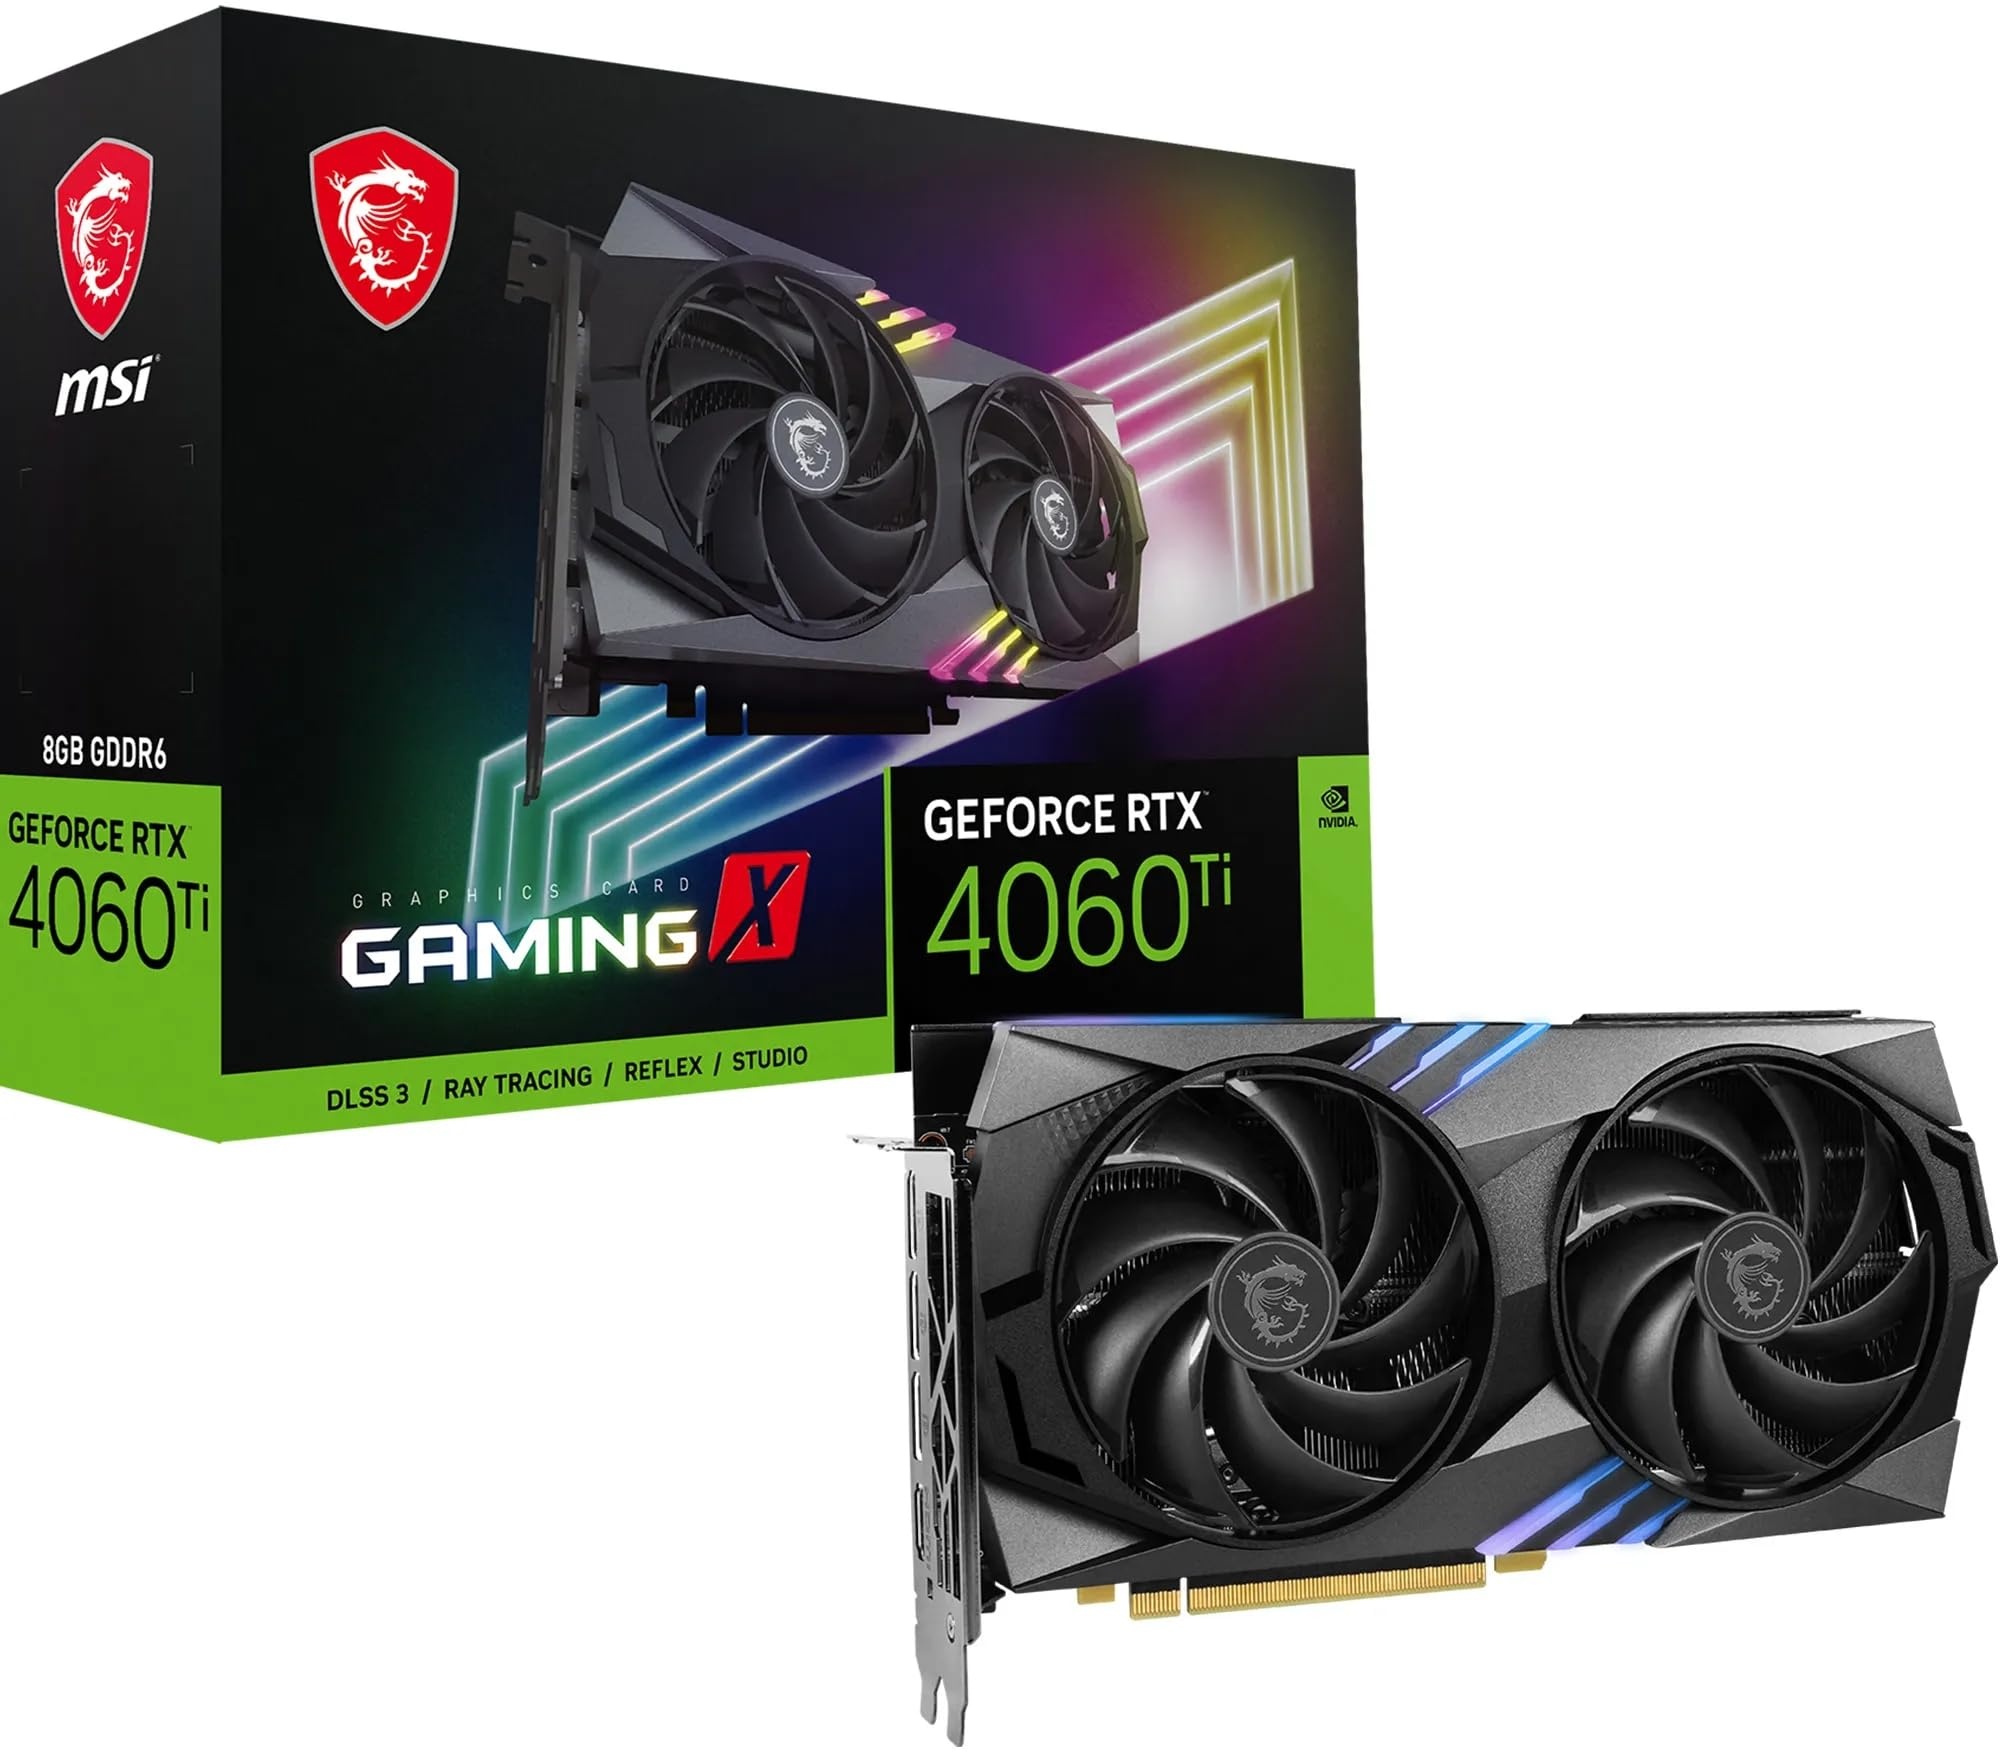 MSI GeForce RTX 4060 Ti Gaming X 8G Grafikkarte - NVIDIA RTX 4060 Ti, 8 GB GDDR6 Speicher, 18Gbps, PCIe 4.0, Twin Frozr 9, RGB, DLSS3